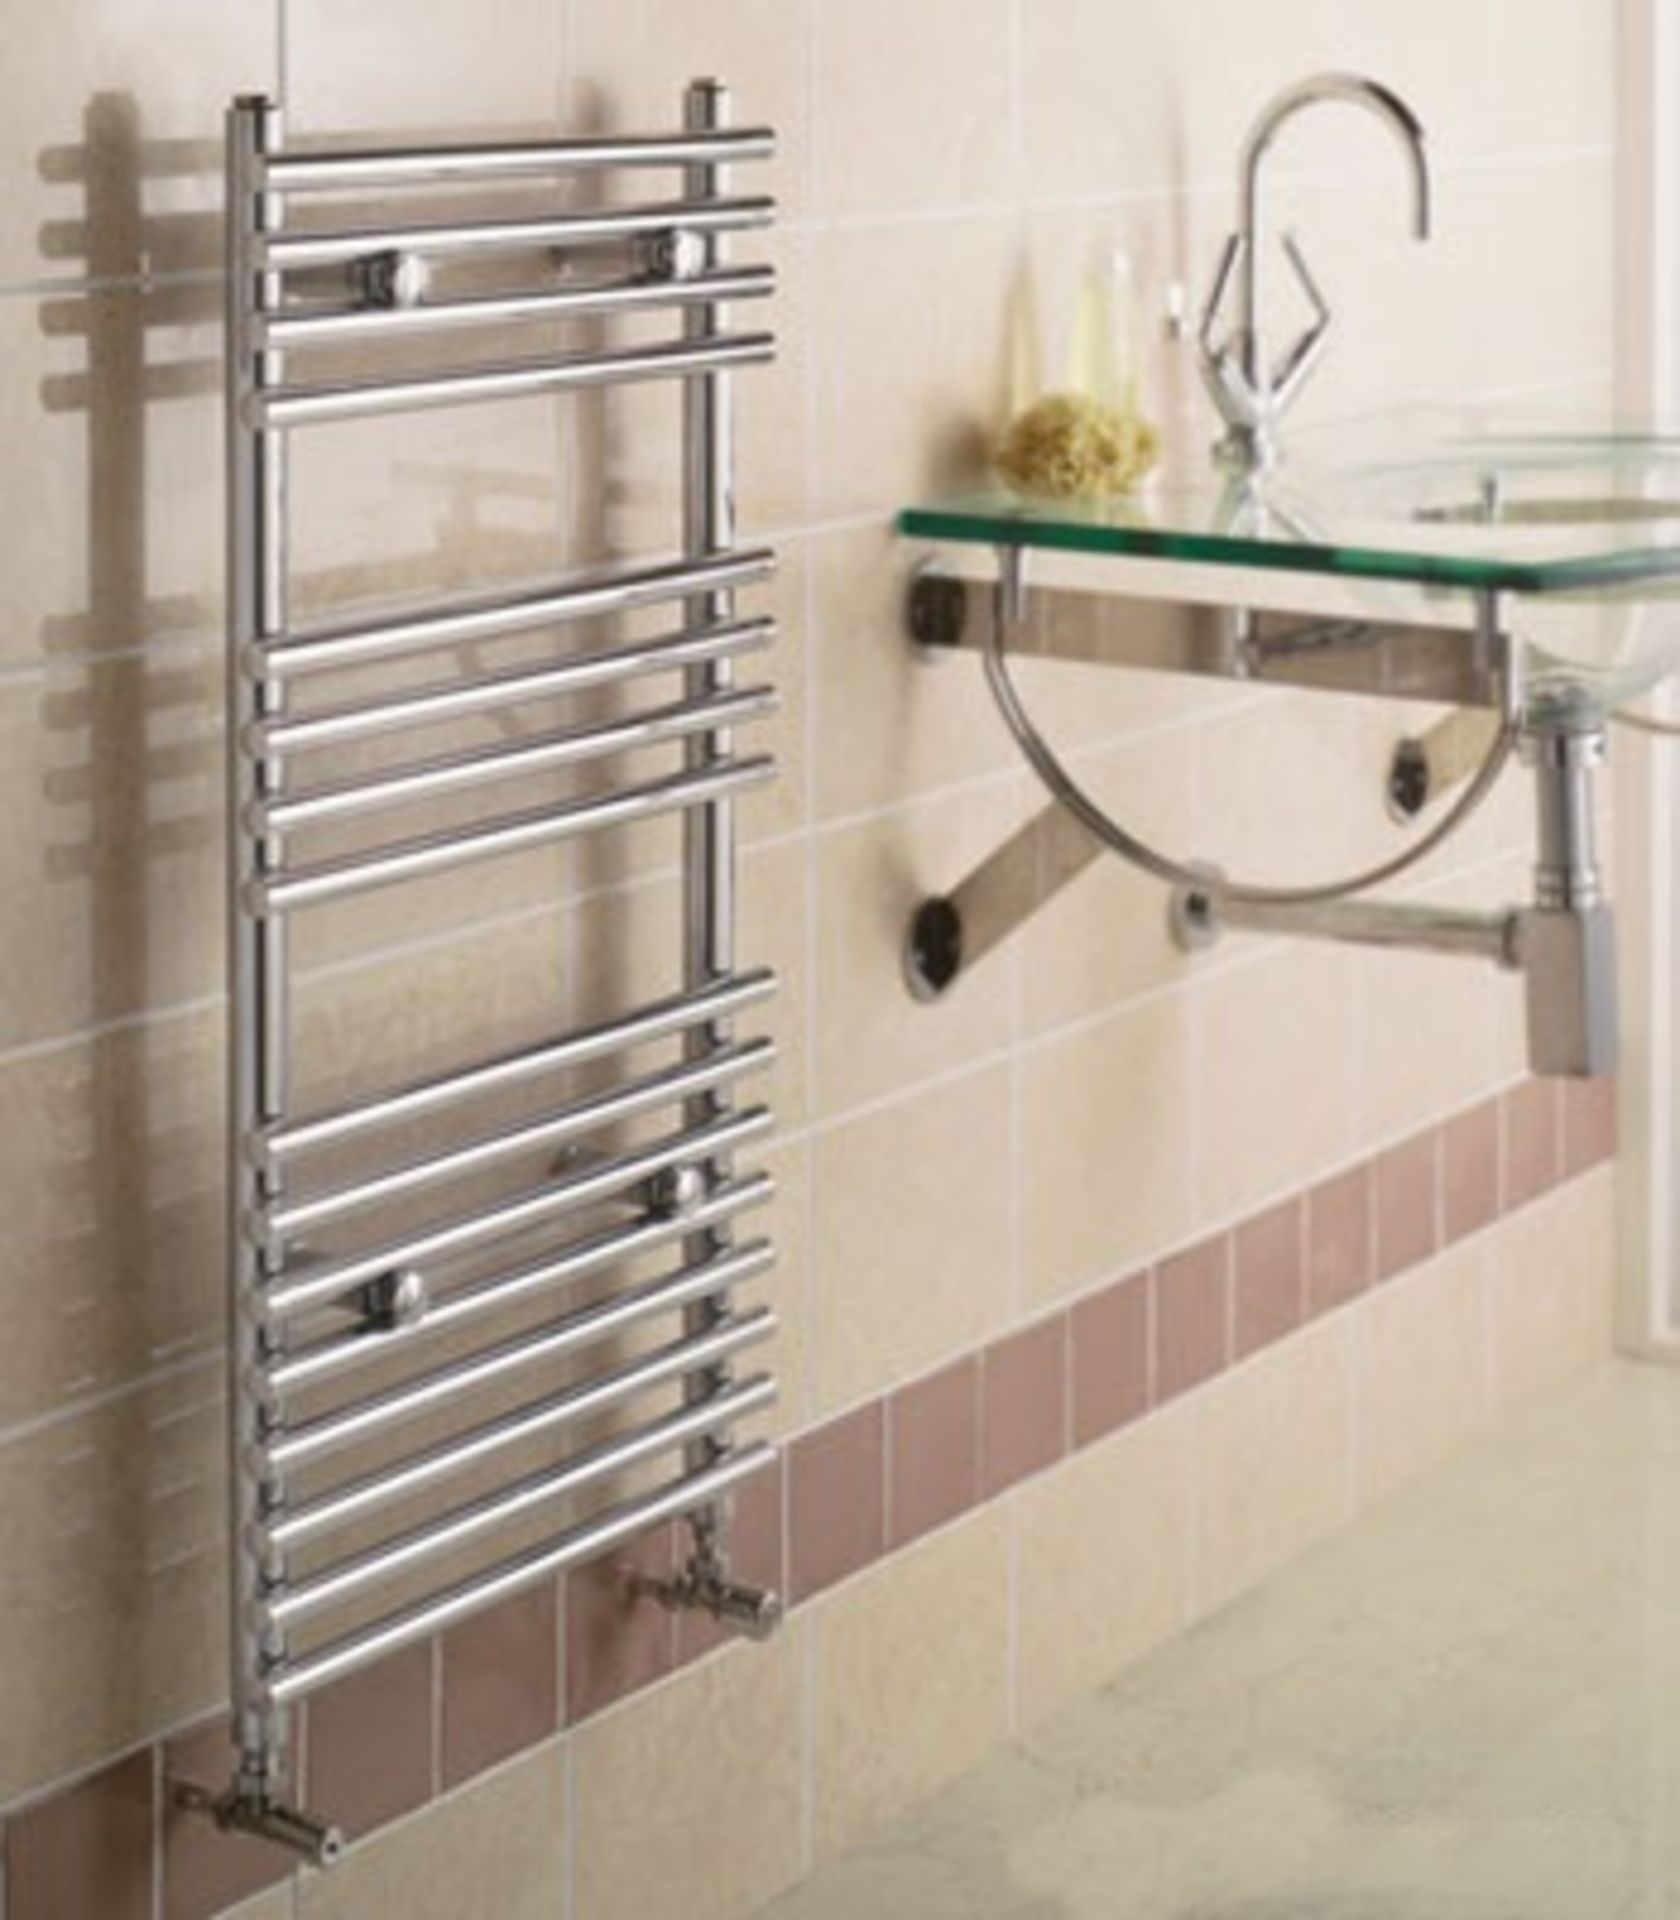 1 x Quinn Topaz Bathroom Ladder Towel Rail - Modern Tube Design With Chrome Finish - Size Height - Image 2 of 3